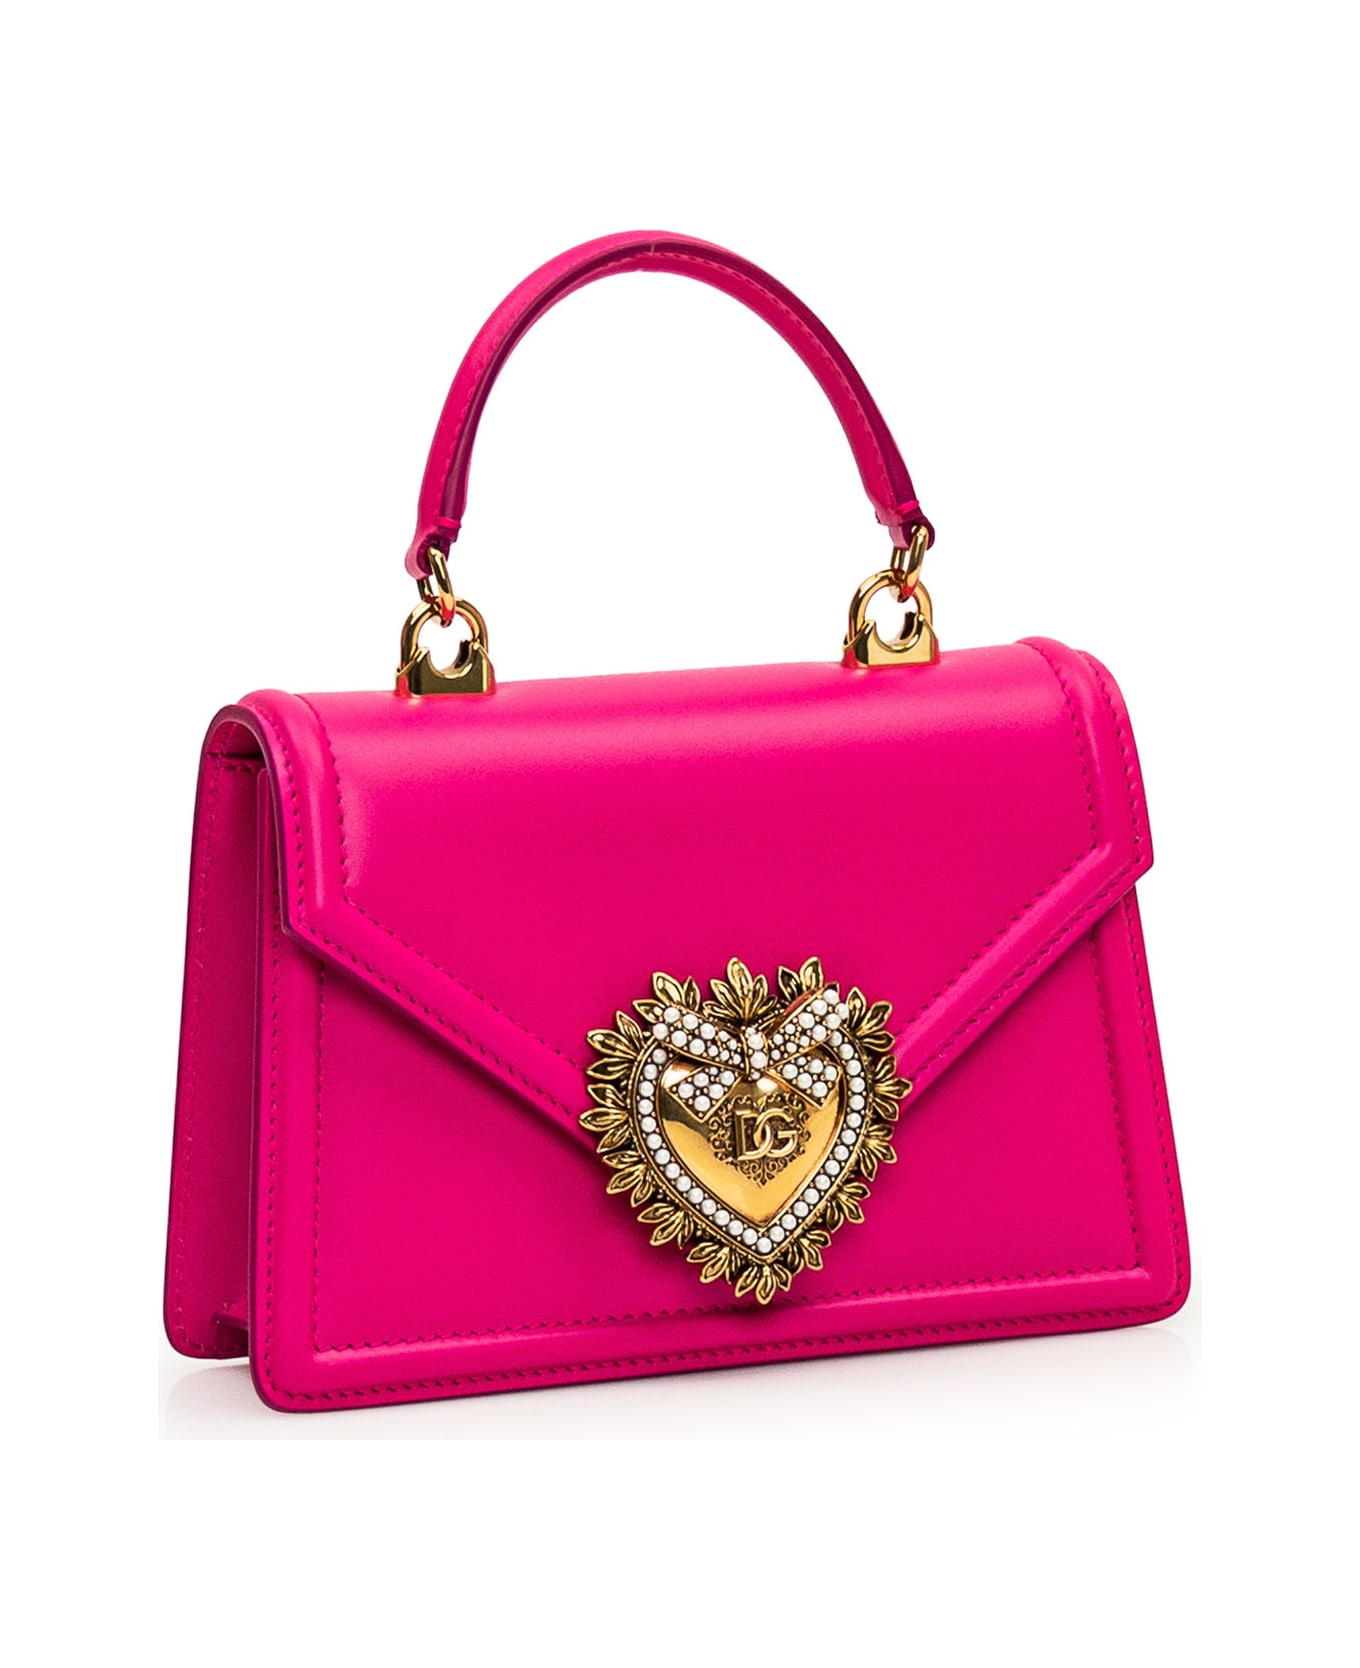 Dolce & Gabbana Devotion Bag - Rosa shocking トートバッグ